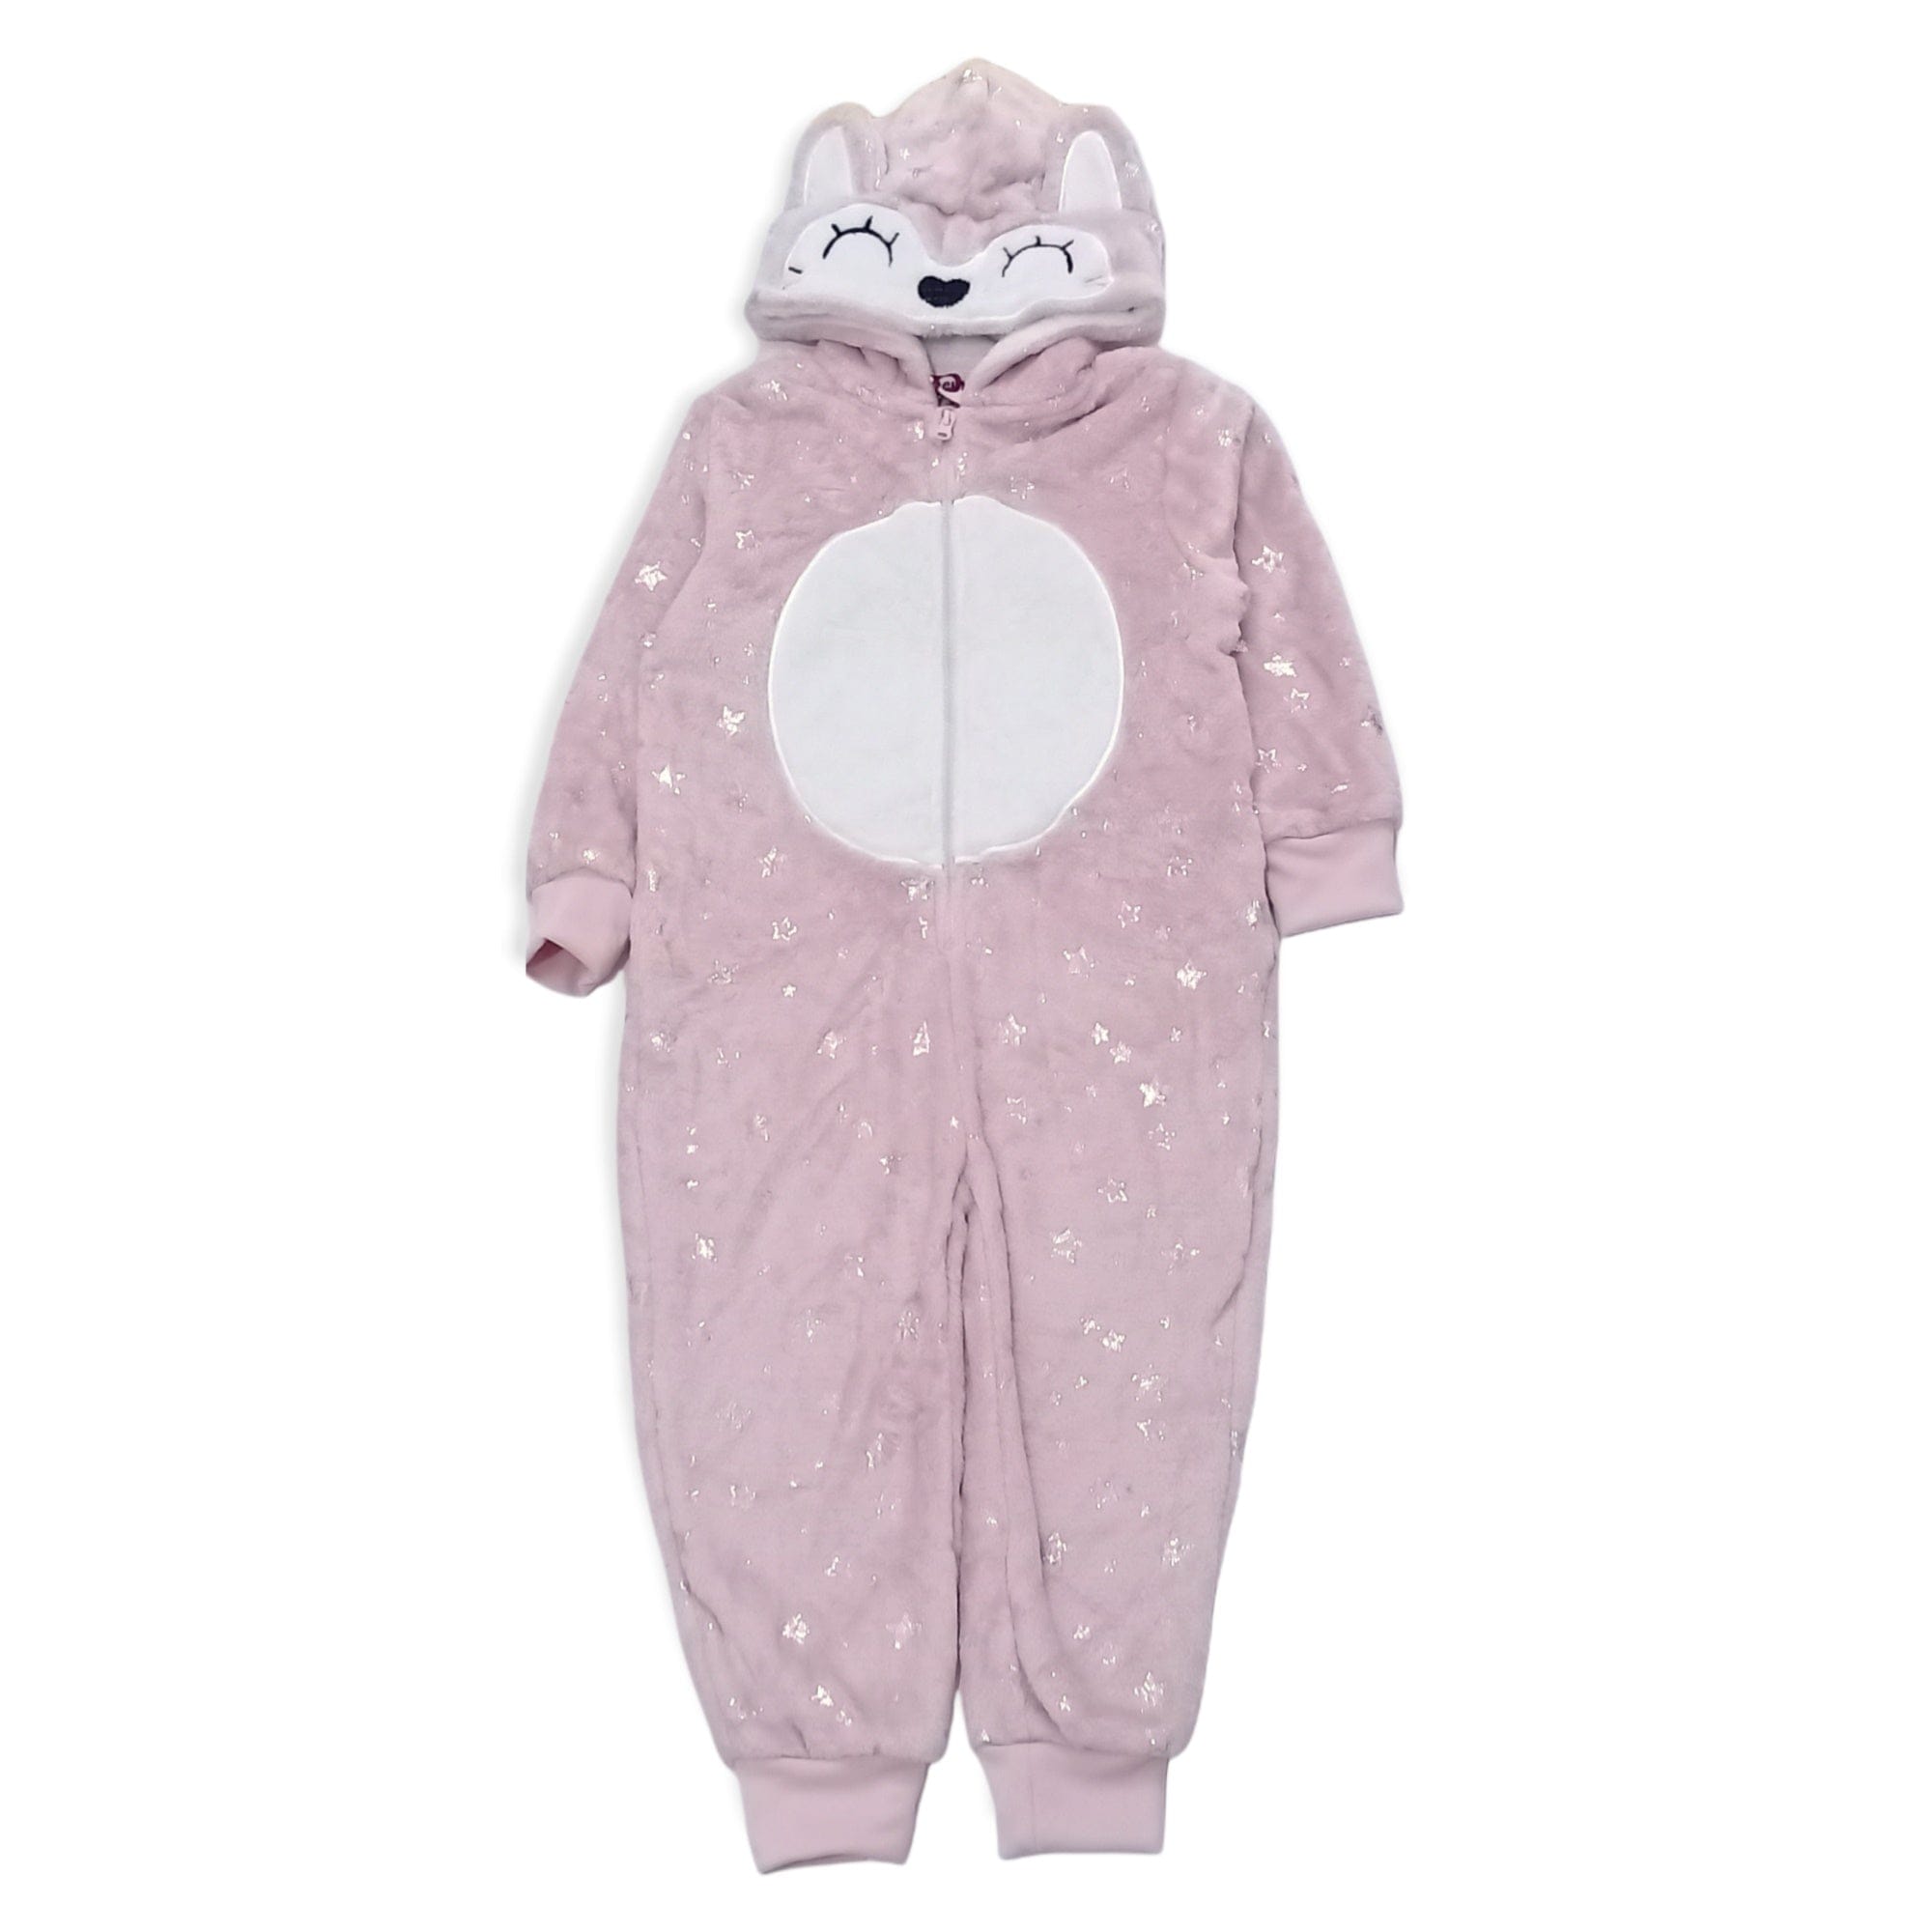 ElOutlet Pyjamas Kids Salopette (Onesie) - Pink